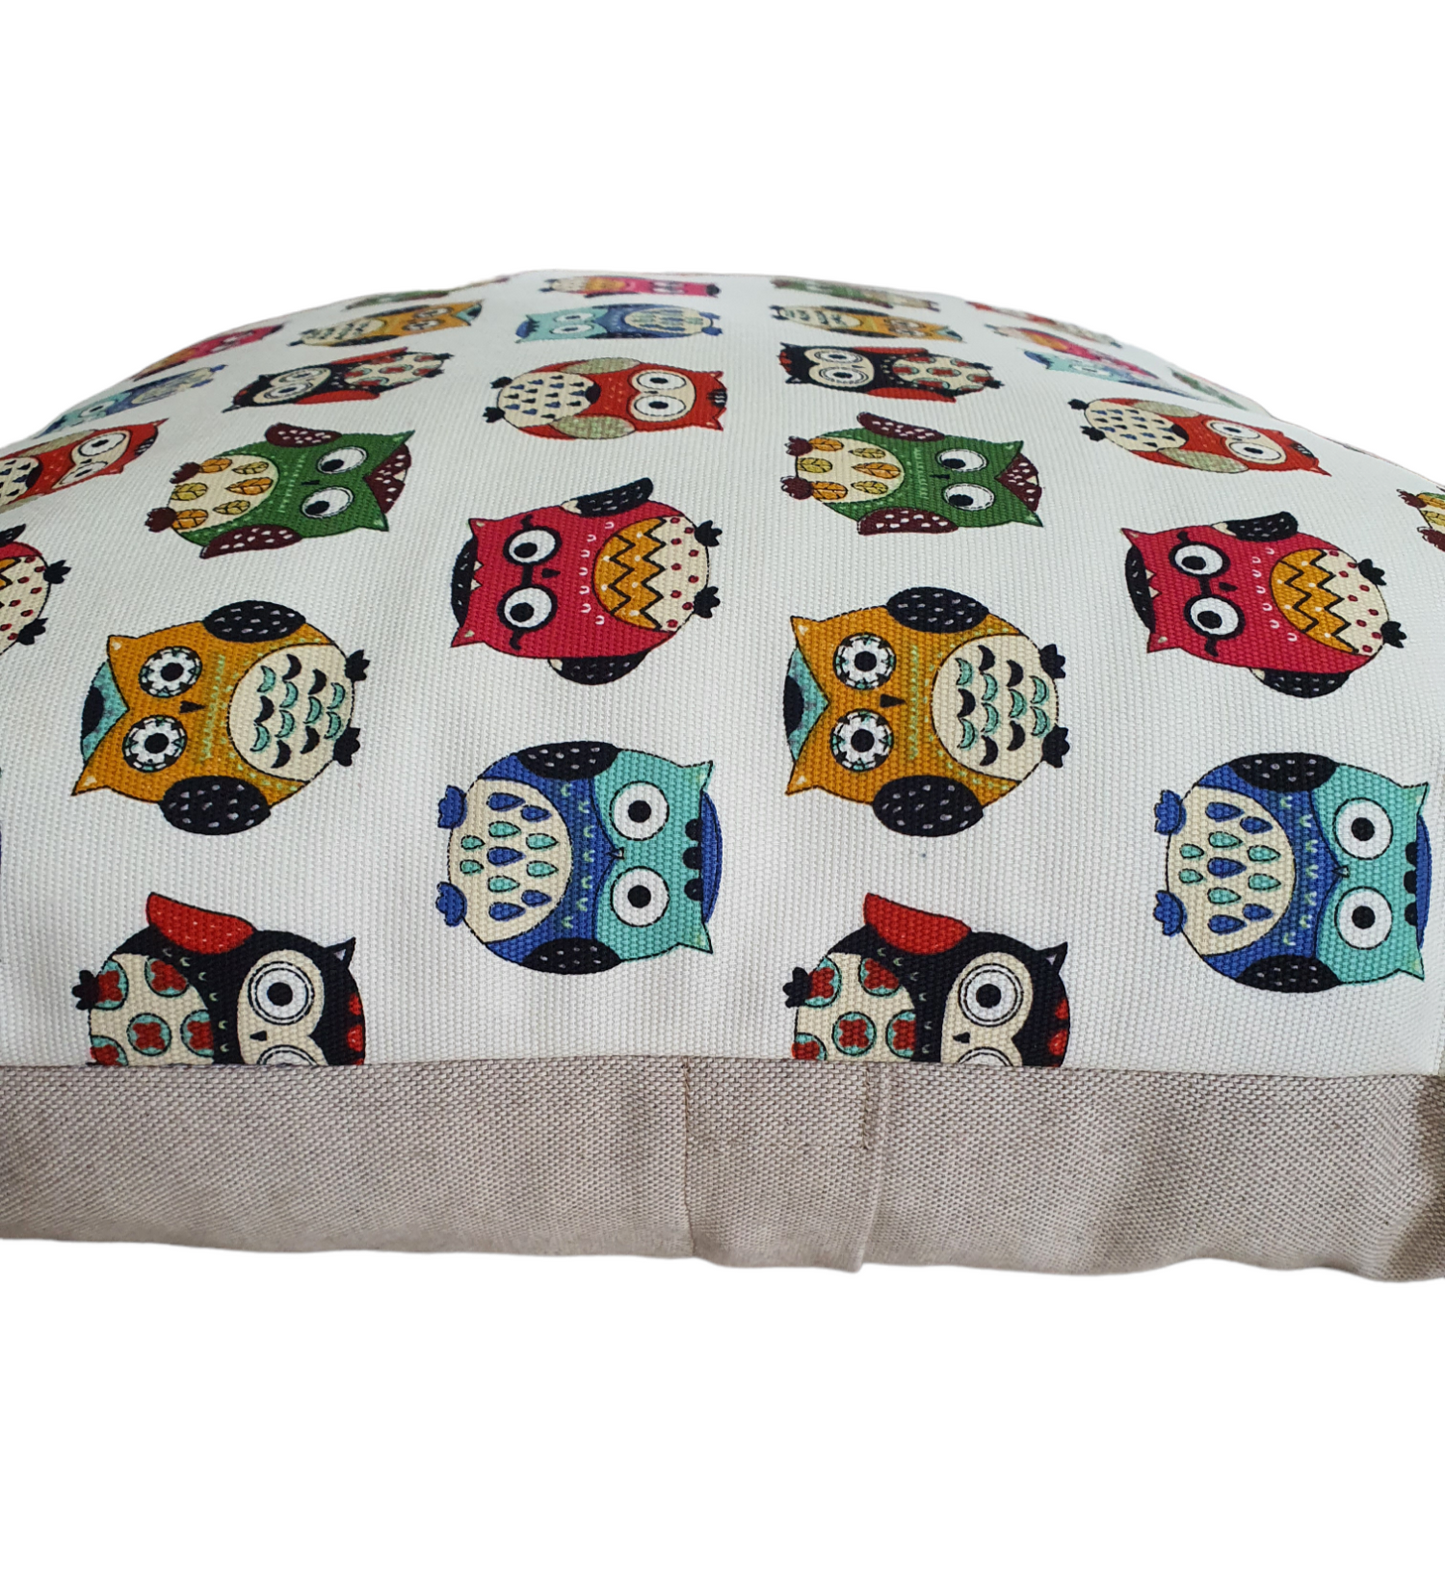 Multicolour Owls - Handmade Cushion Cover (18"x18")